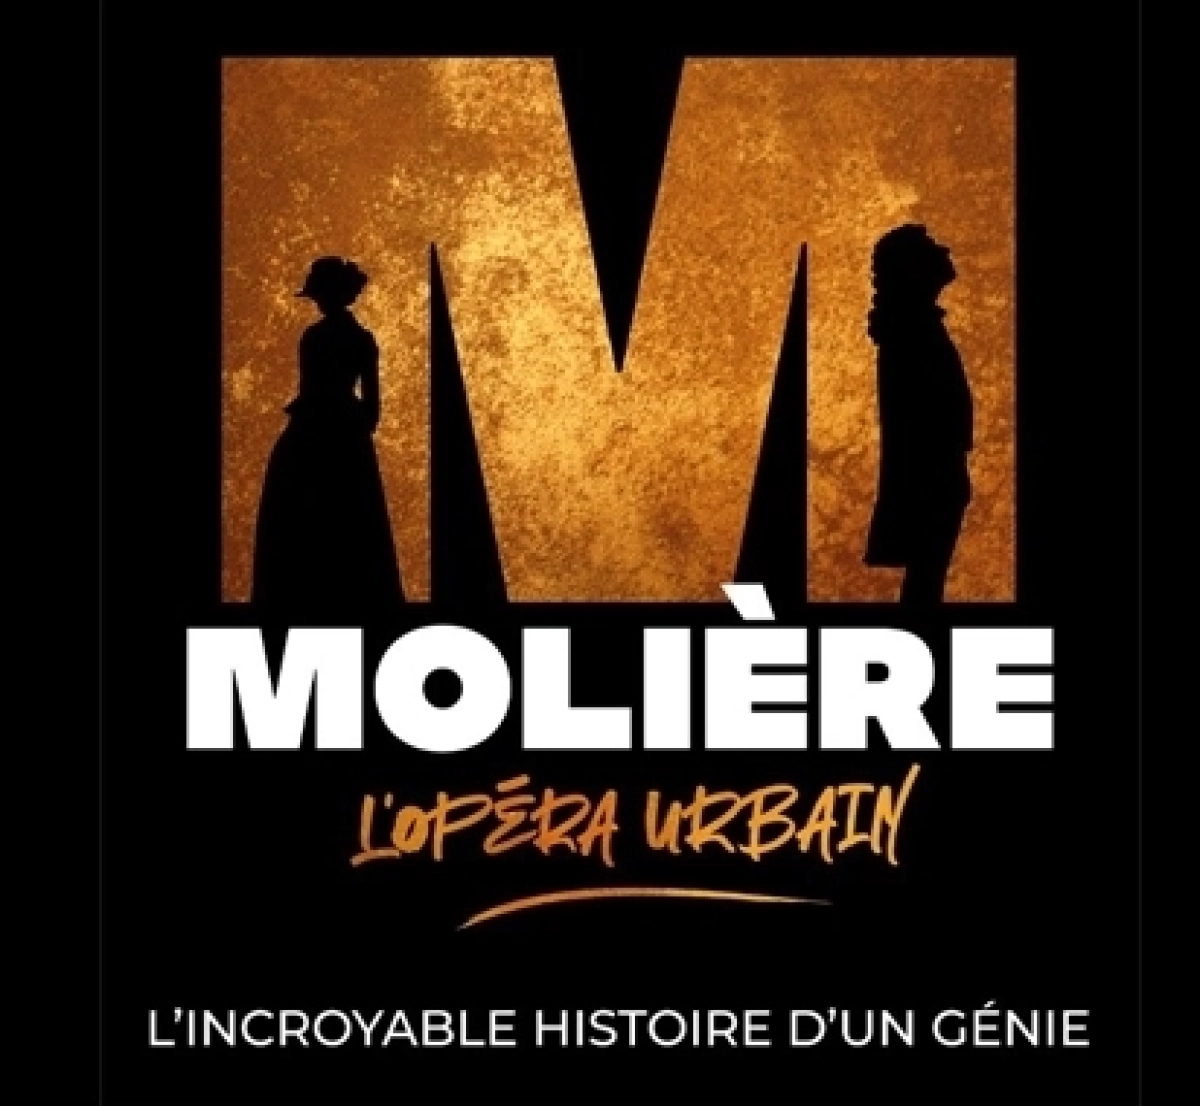 Billets Moliere L'opera Urbain (Zenith Nancy - Maxeville)